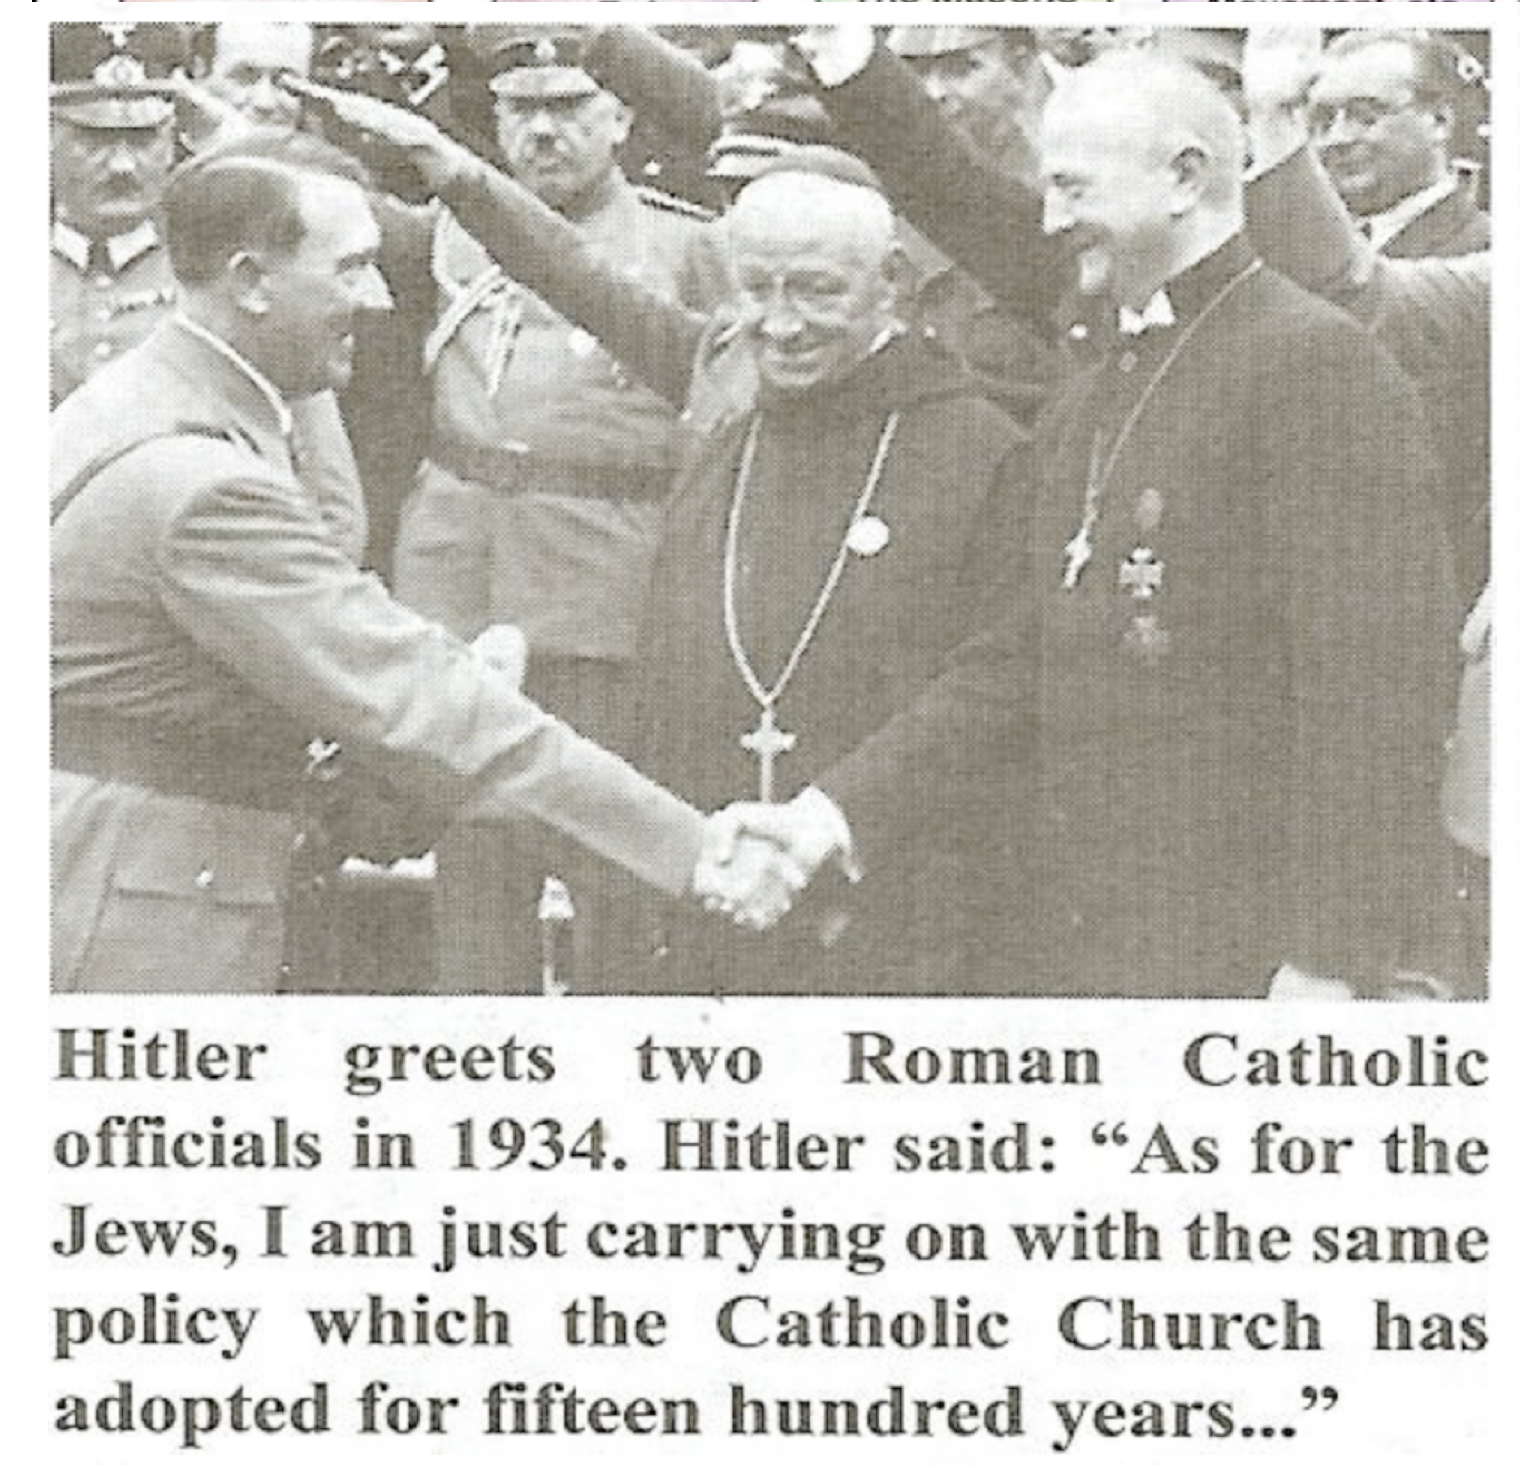 hitler greets 2 vatican officials in 1934.jpg